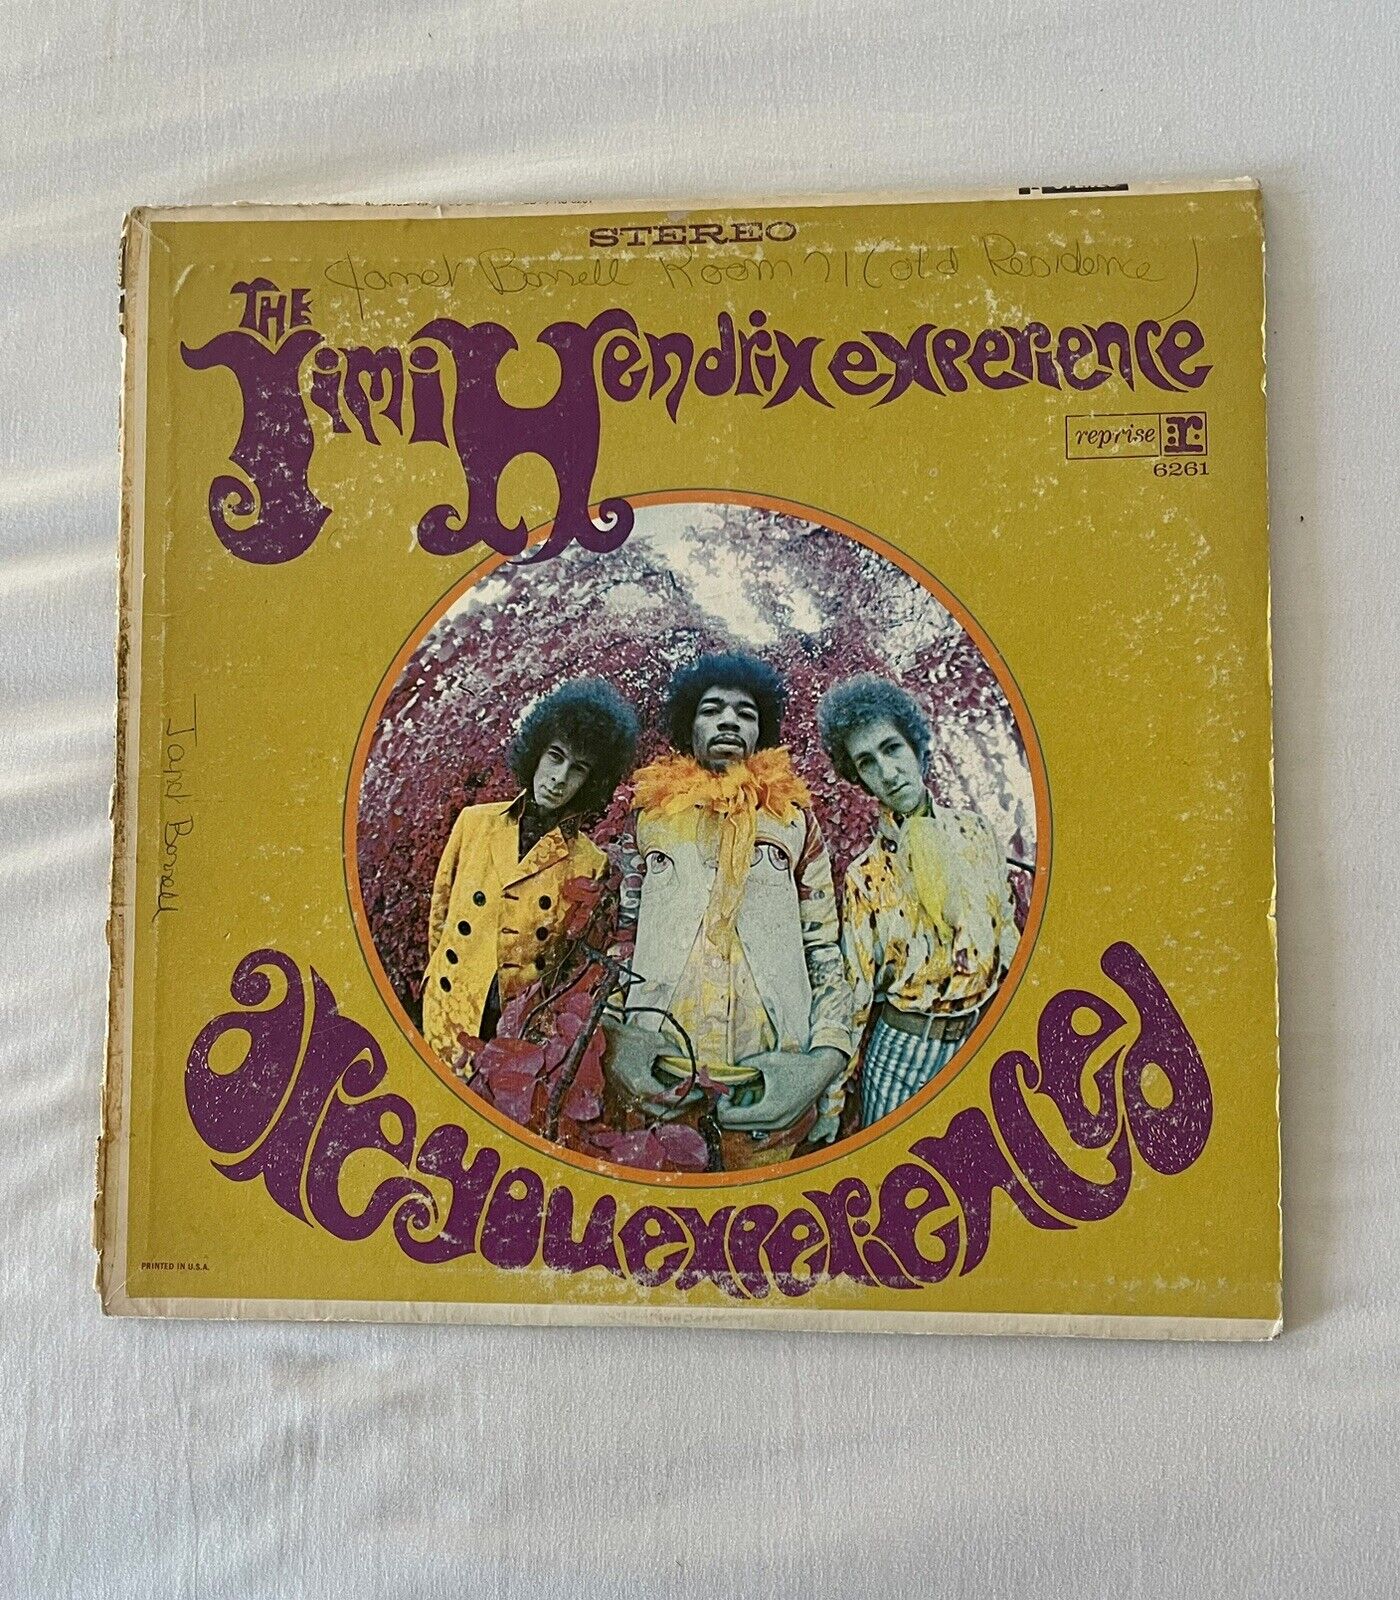 Jimi Hendrjx experience 'Are you experienced' Original Vinyl LP  1967